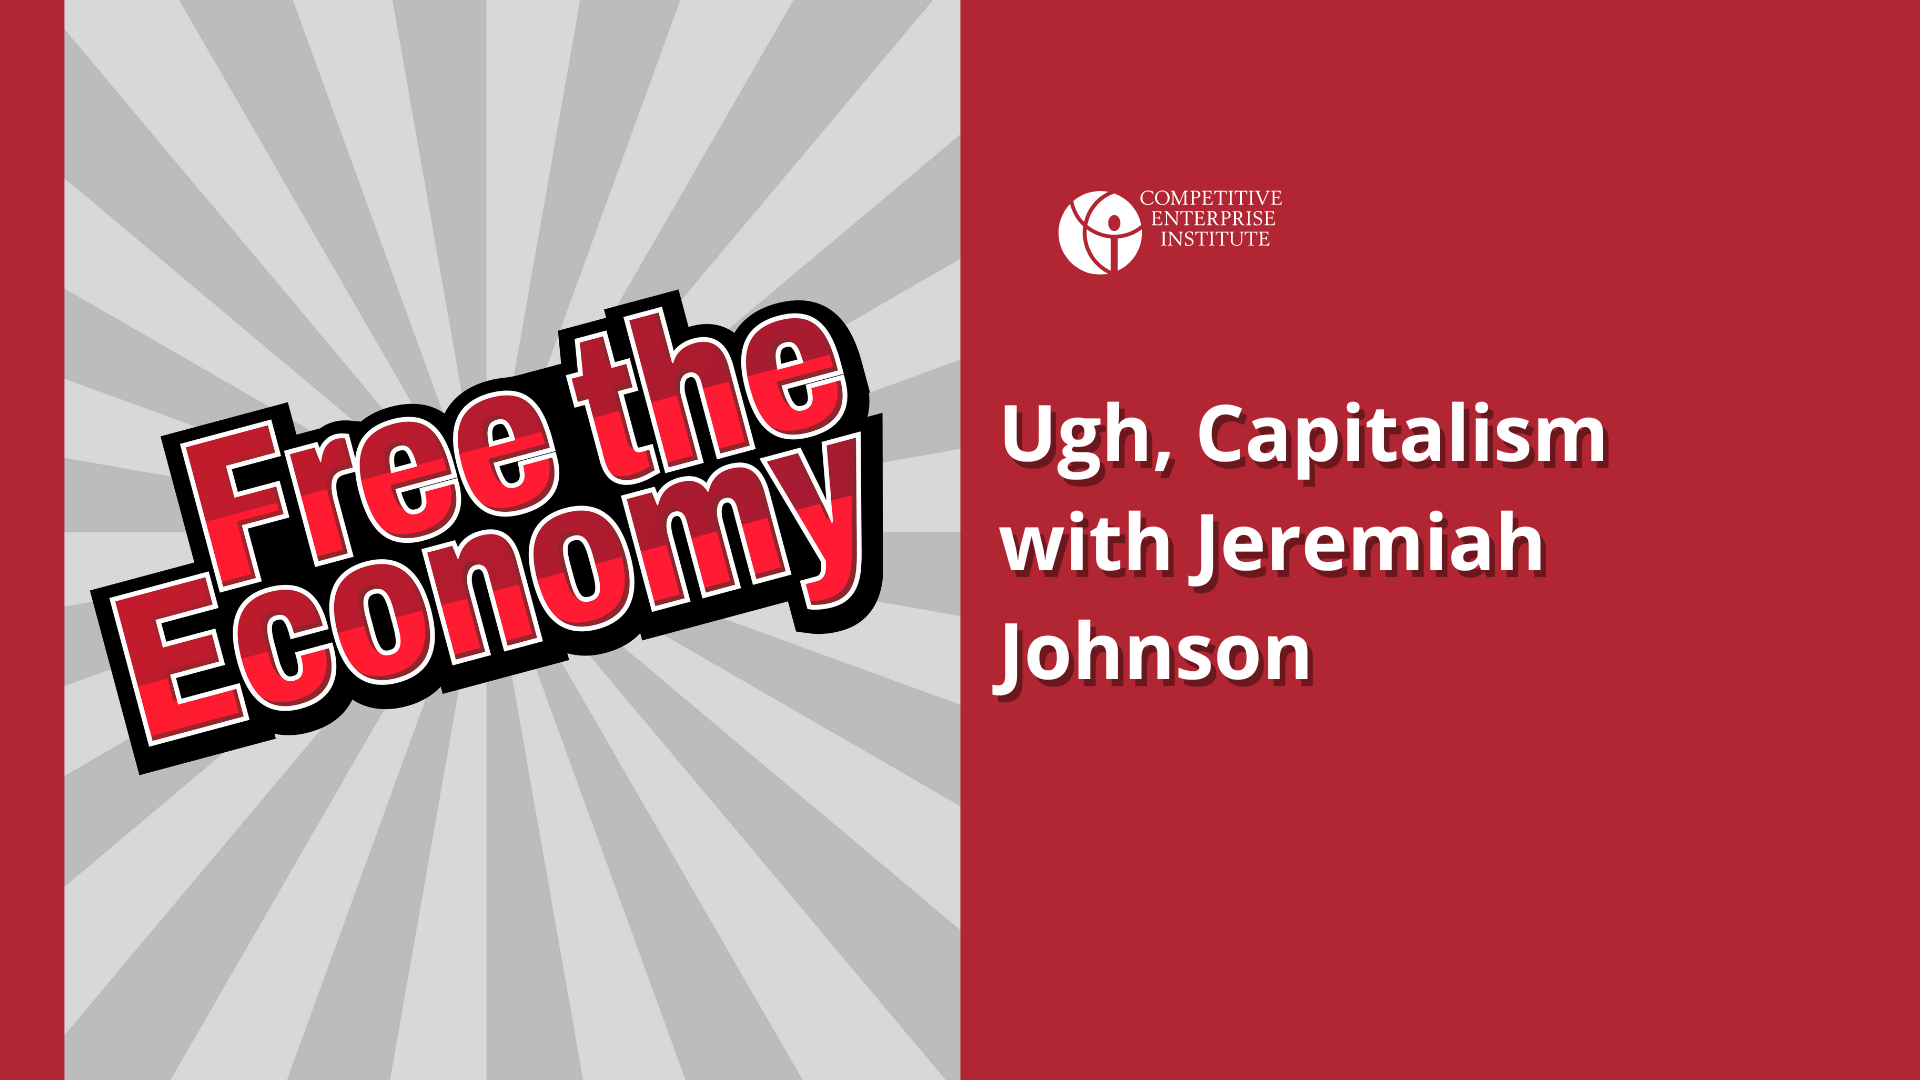 Ugh, Capitalism with Jeremiah Johnson